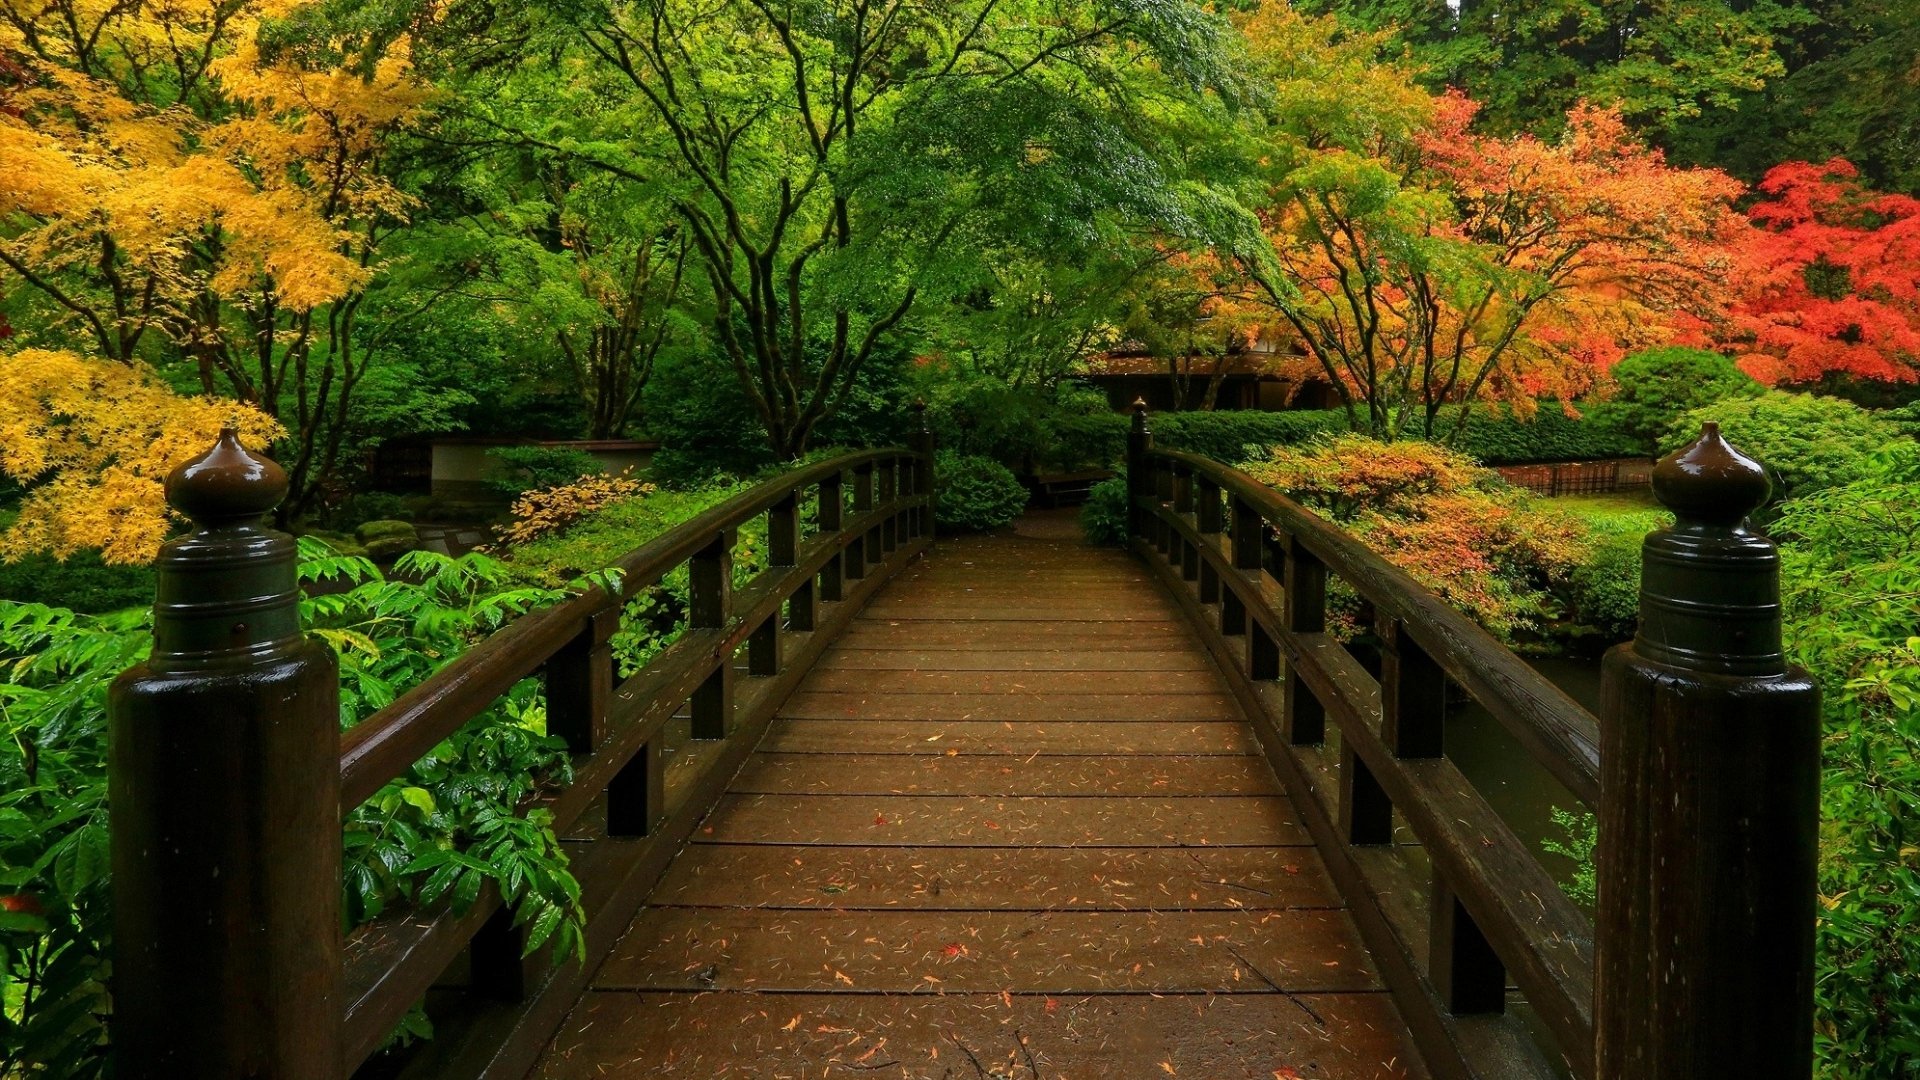 Bridge in Japanese Garden  HD  Wallpaper Background Image 